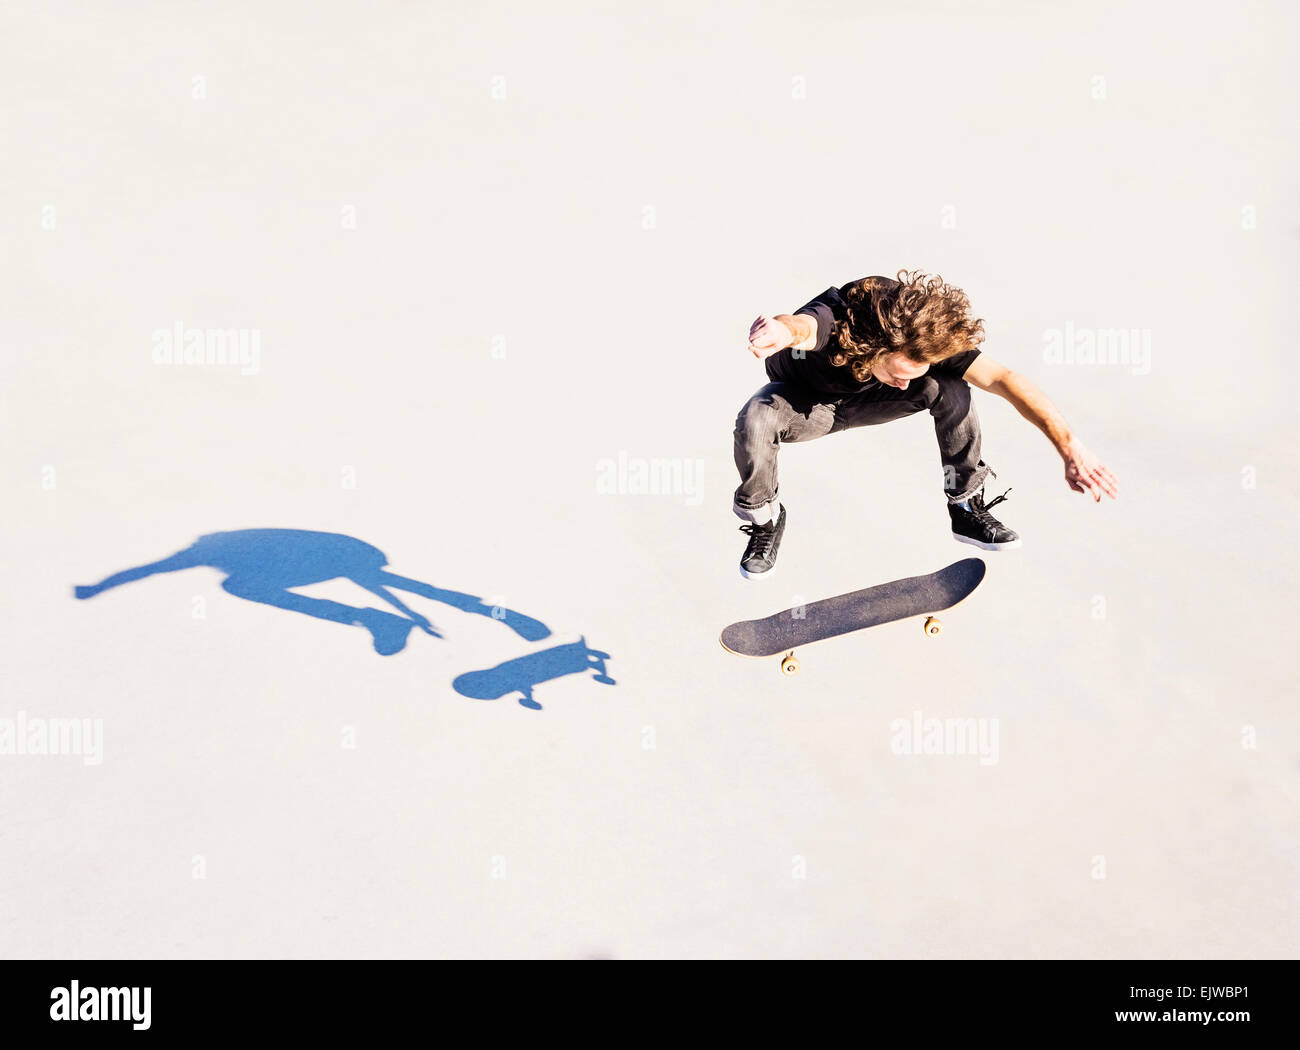 USA, Florida, West Palm Beach, Mann springt auf Skateboard im skatepark Stockfoto